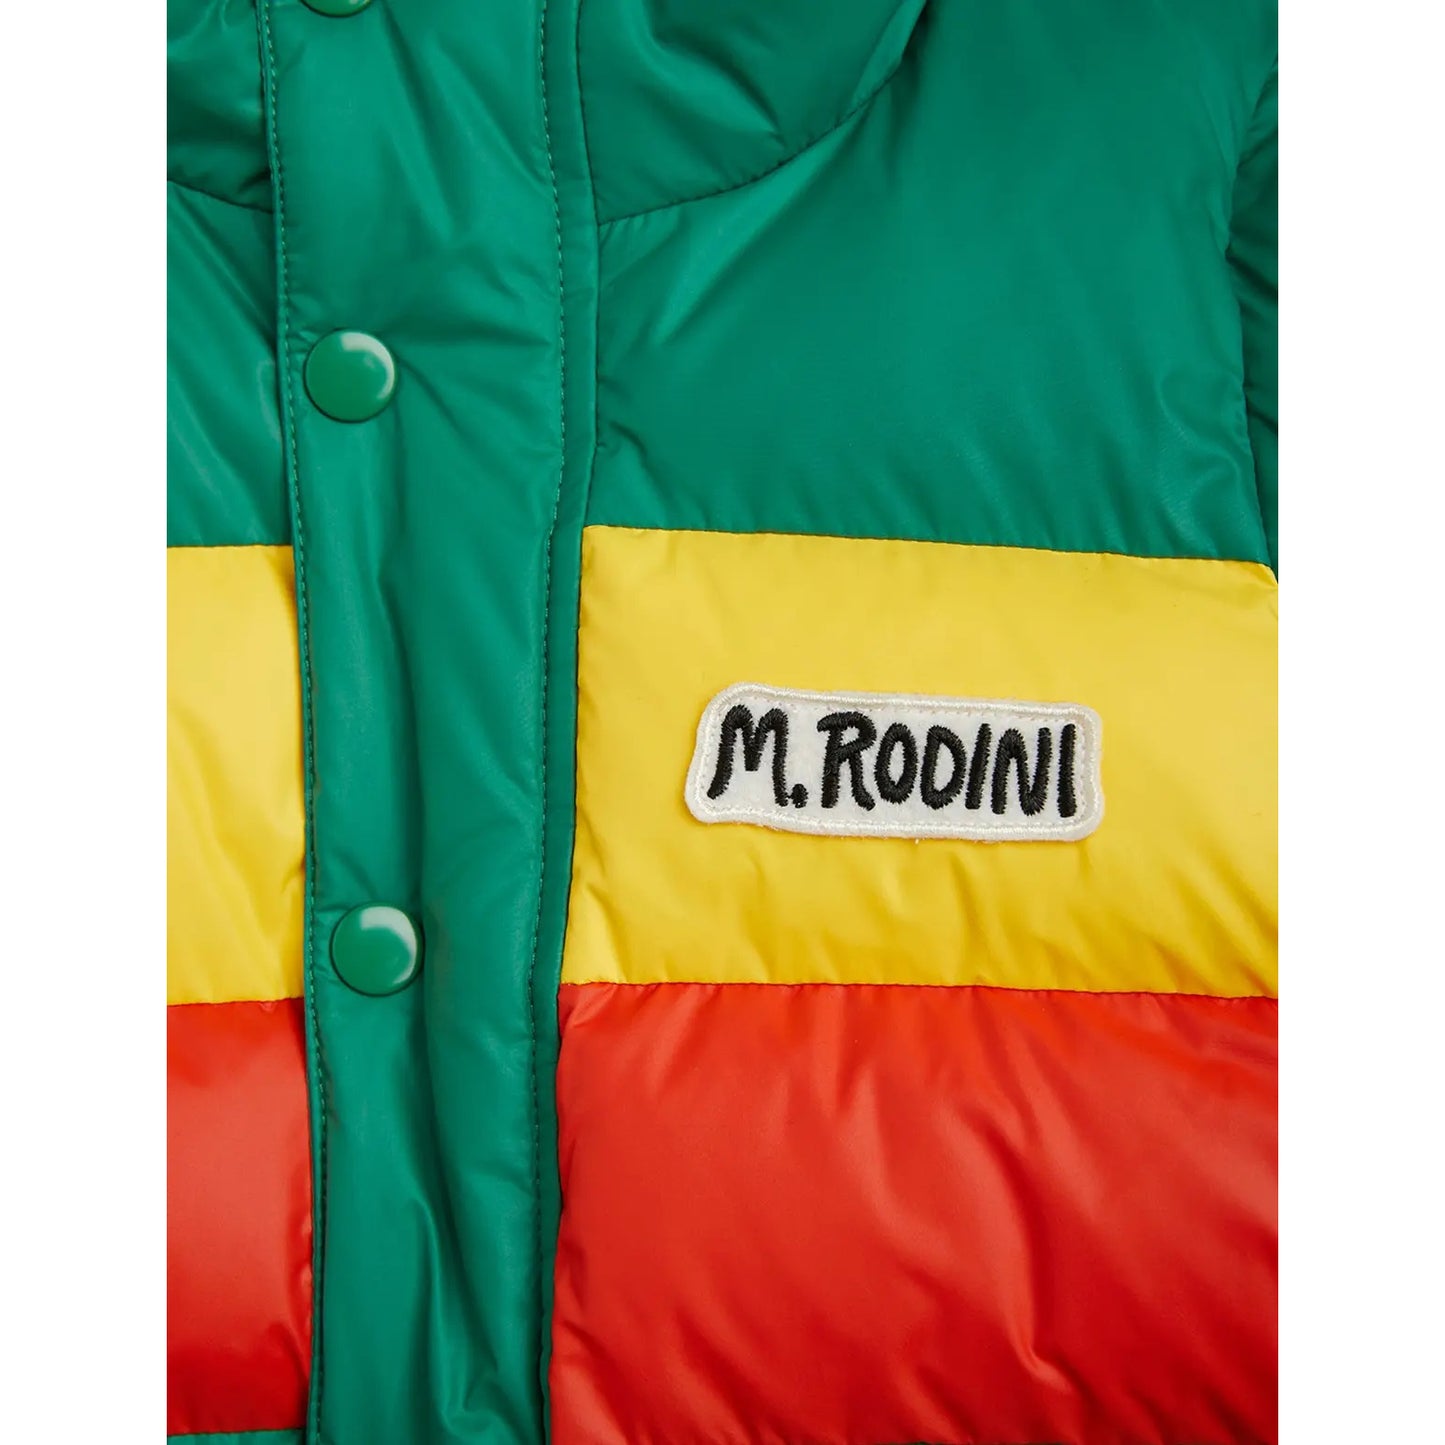 MINI RODINI Zipper Sleeve Puffer Jacket Green ALWAYS SHOW